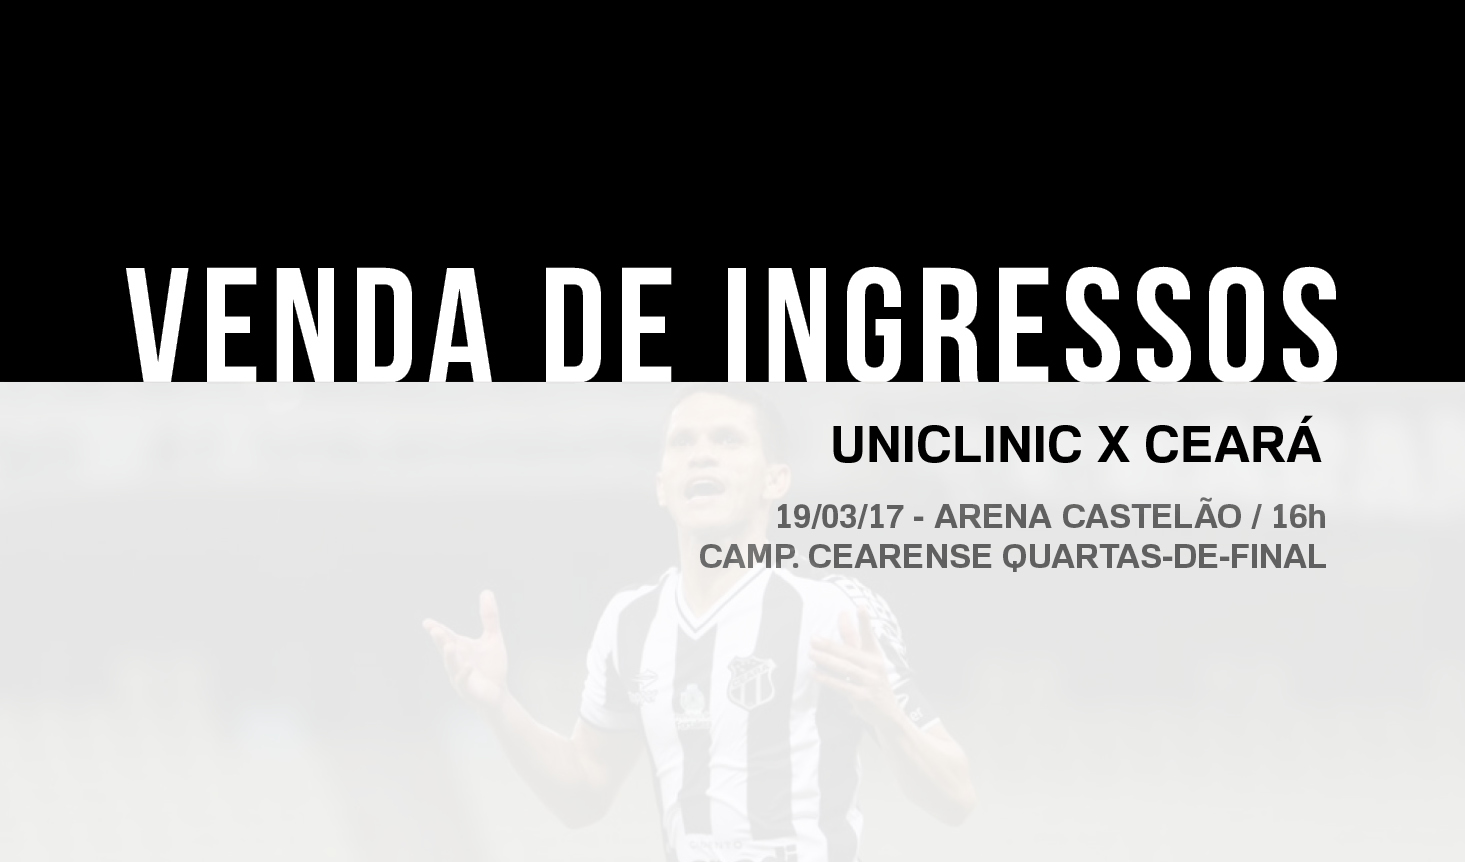 Vendas de ingressos: Uniclinic x Ceará